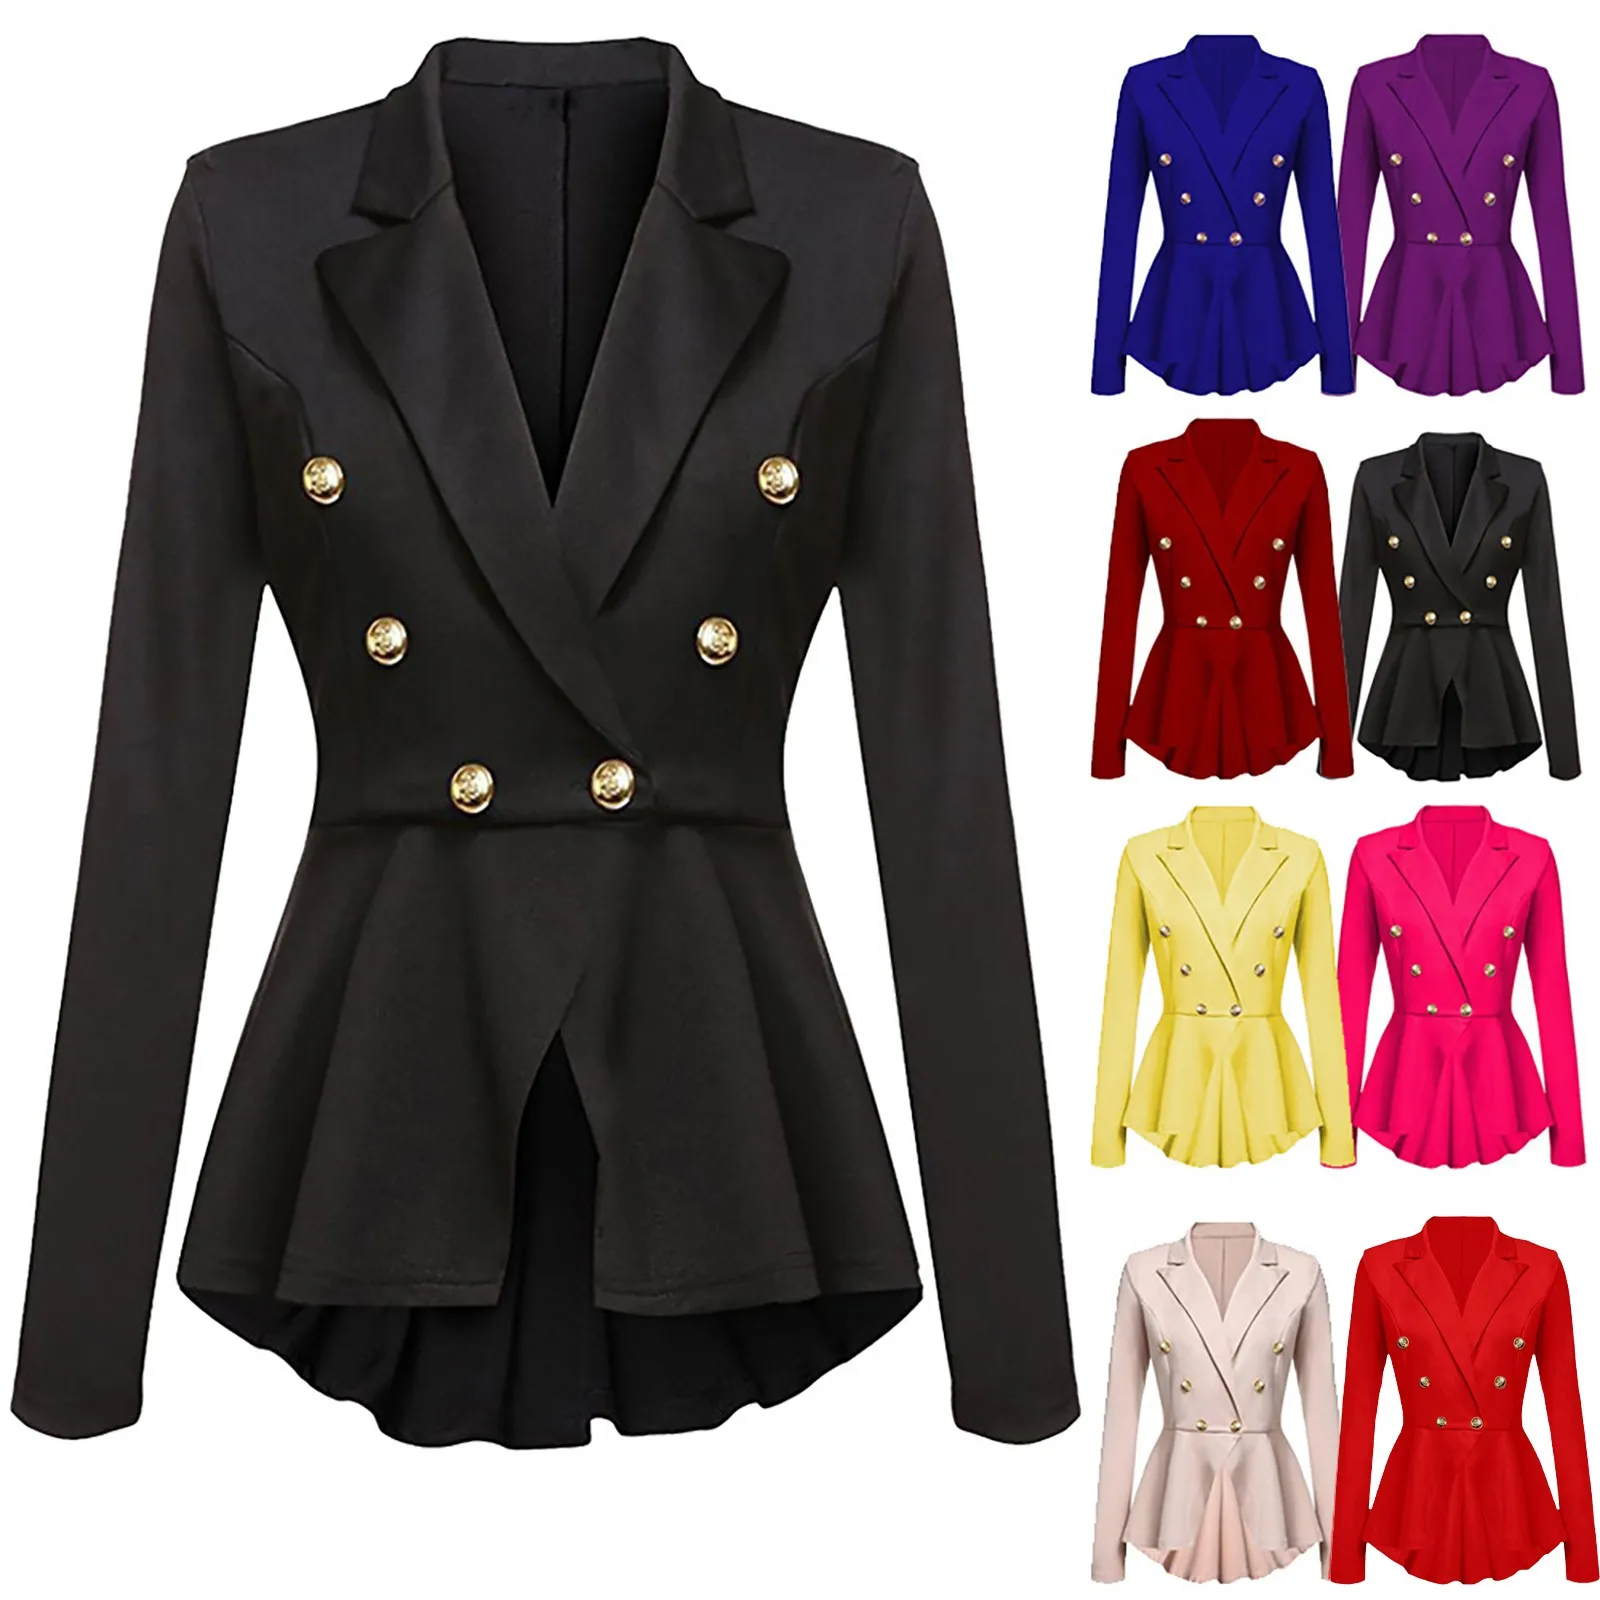 Autumn Women Fashion Long Sleeve Blazer Ruffles Peplum Button Casual Jacket Coat Outwear Abrigo Mujer Formal Jackets 2021 New